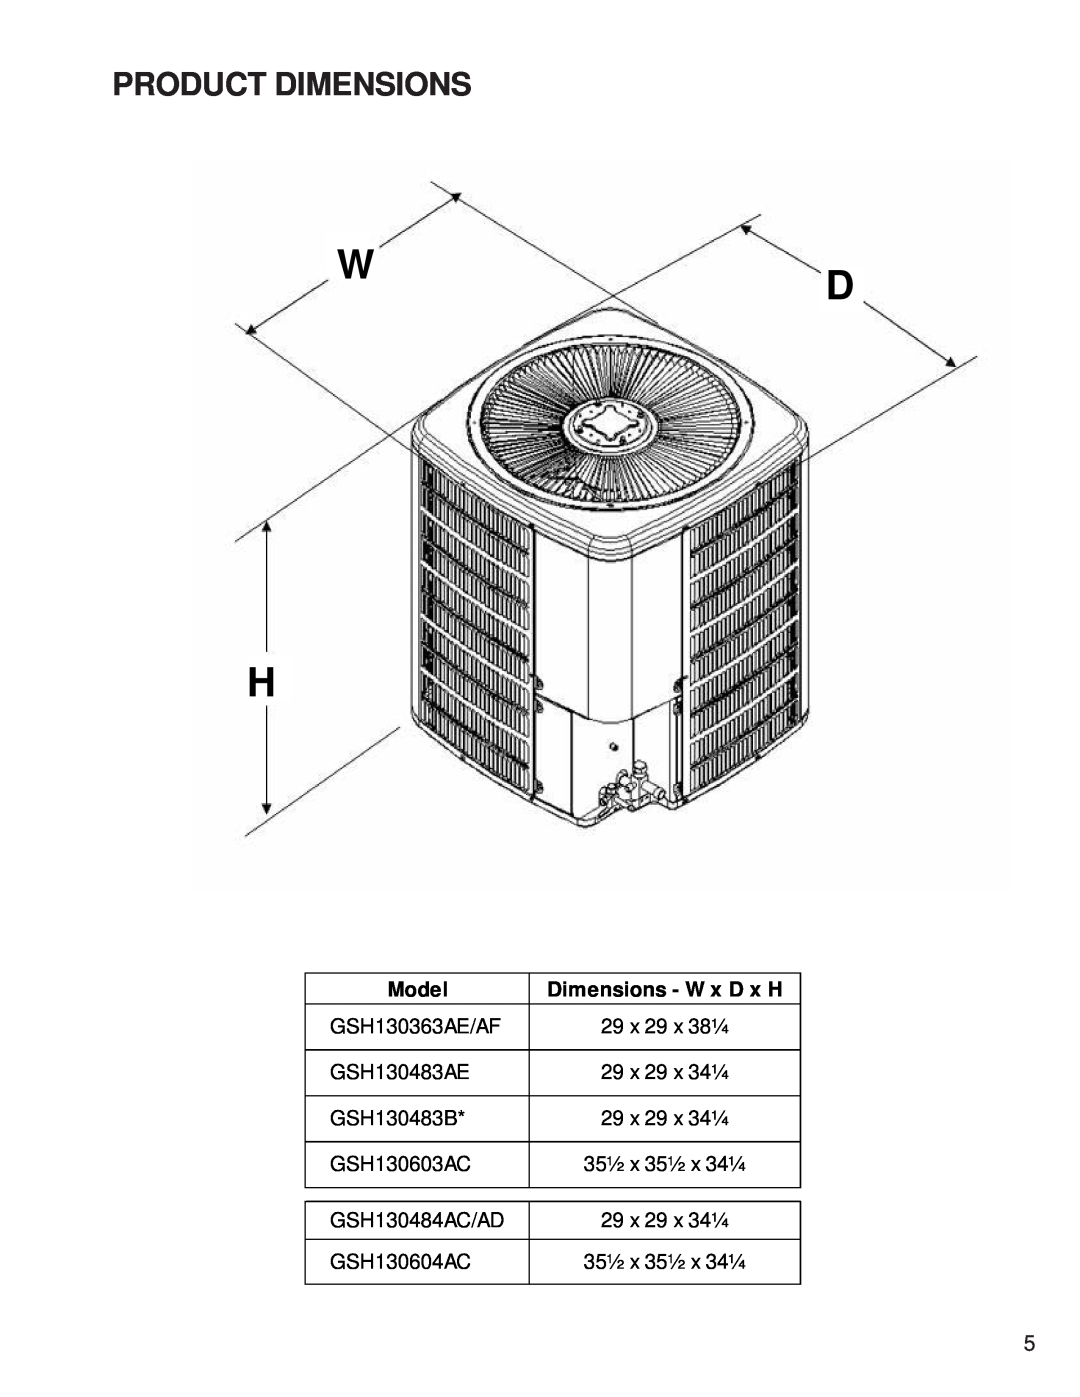 Goodmans GSH 13 SEER - 3 Phase Split System Heat Pump, RT6212008x5 Product Dimensions, Model, Dimensions - W x D x H, Wd H 